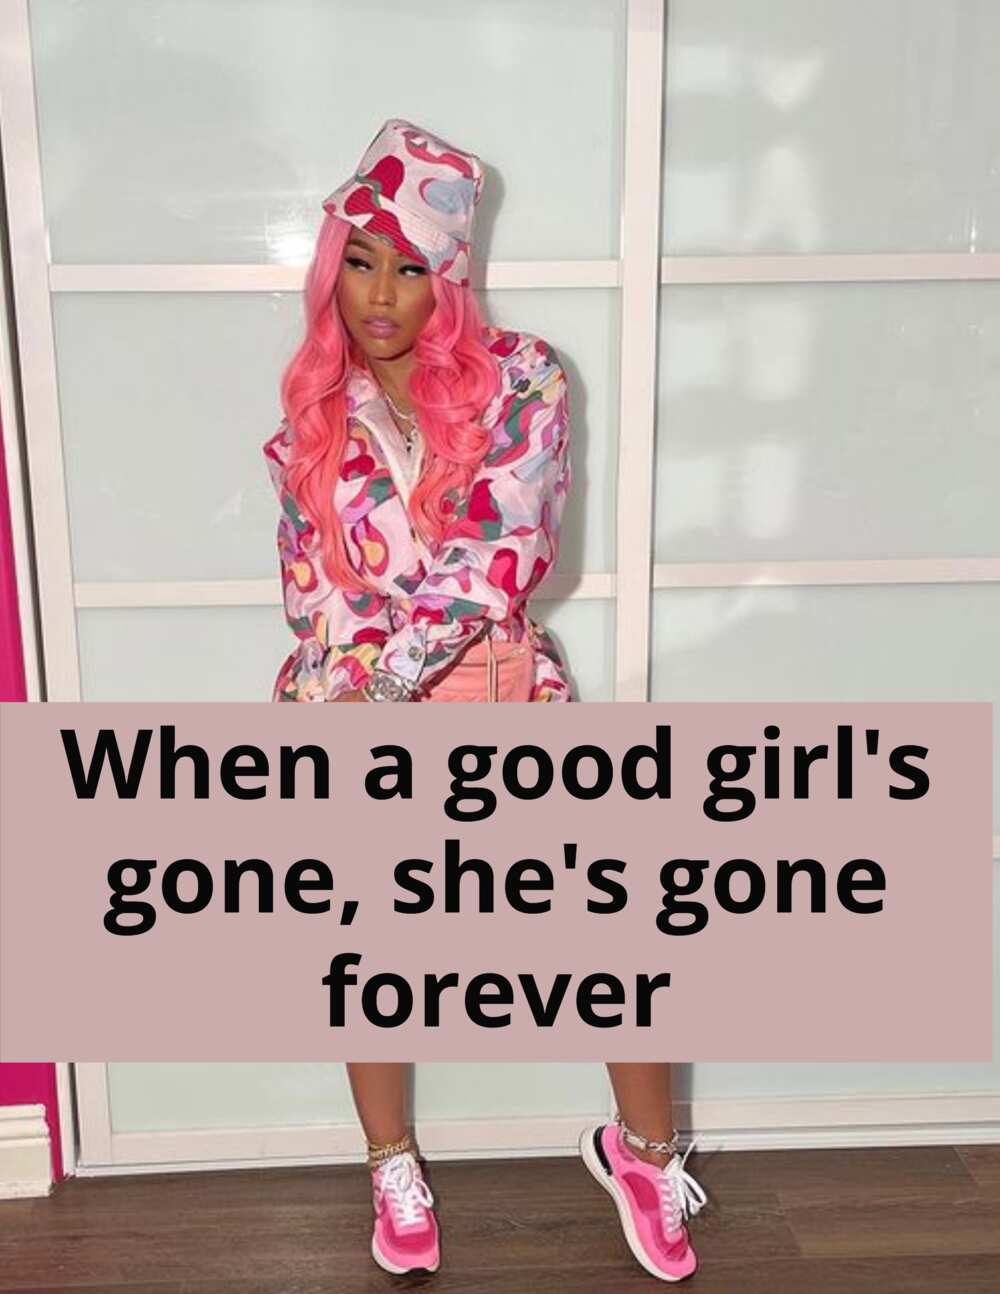 Best Nicki Minaj quotes about being single